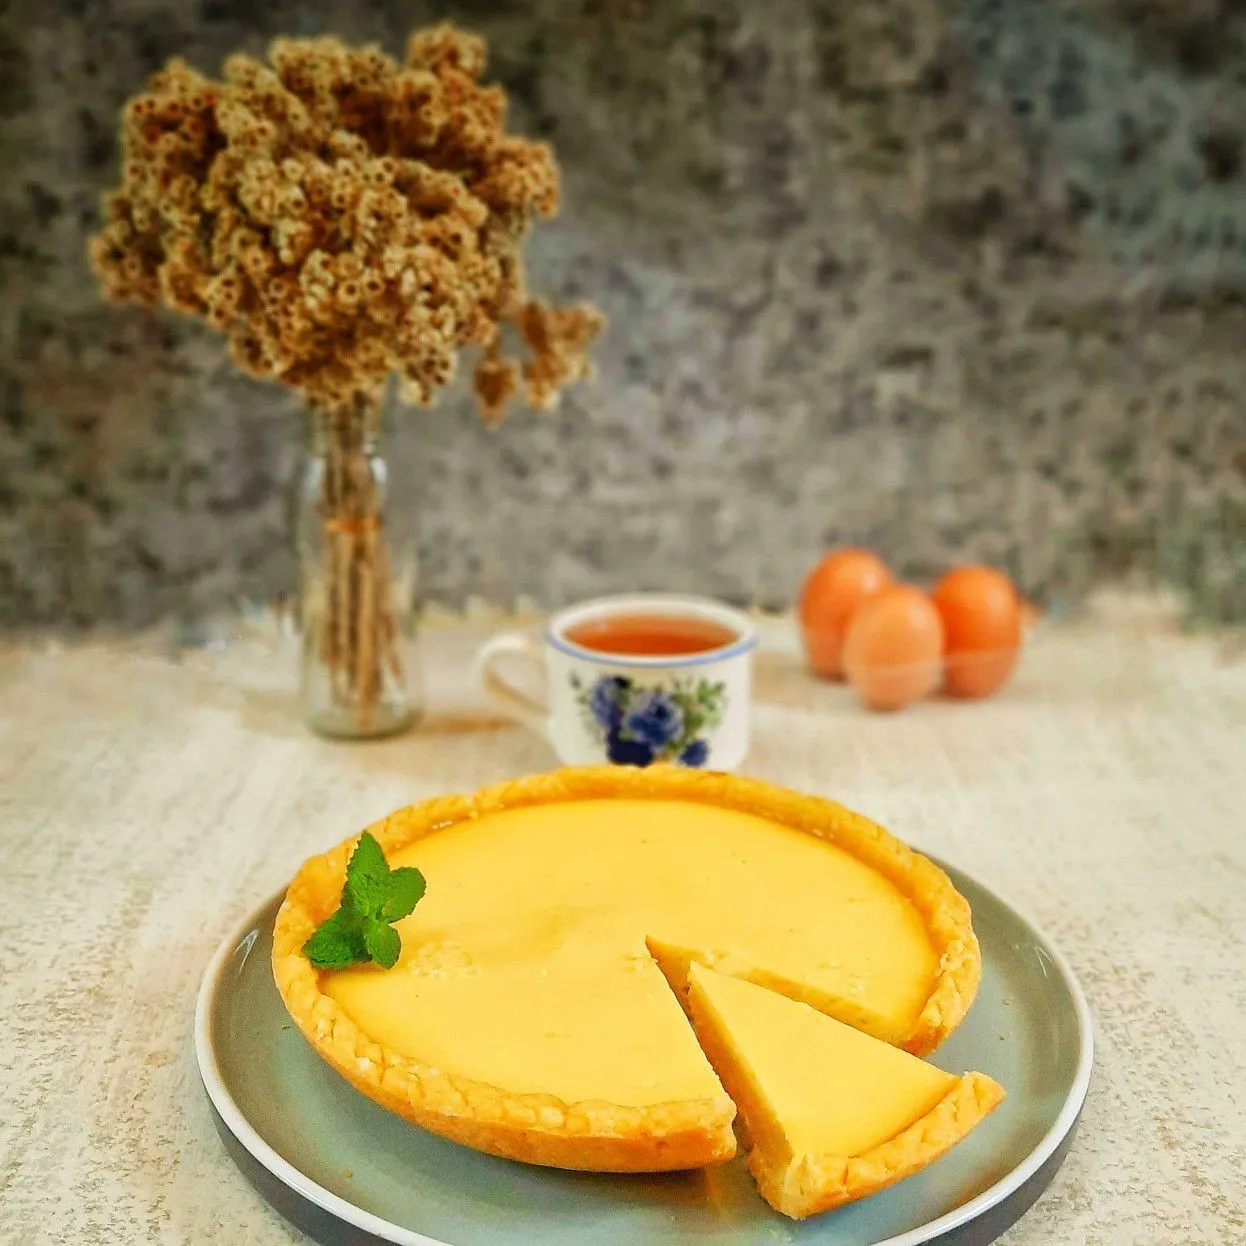 Kue Lontar Papua (Egg Tart) #JagoMasakMinggu2Periode2